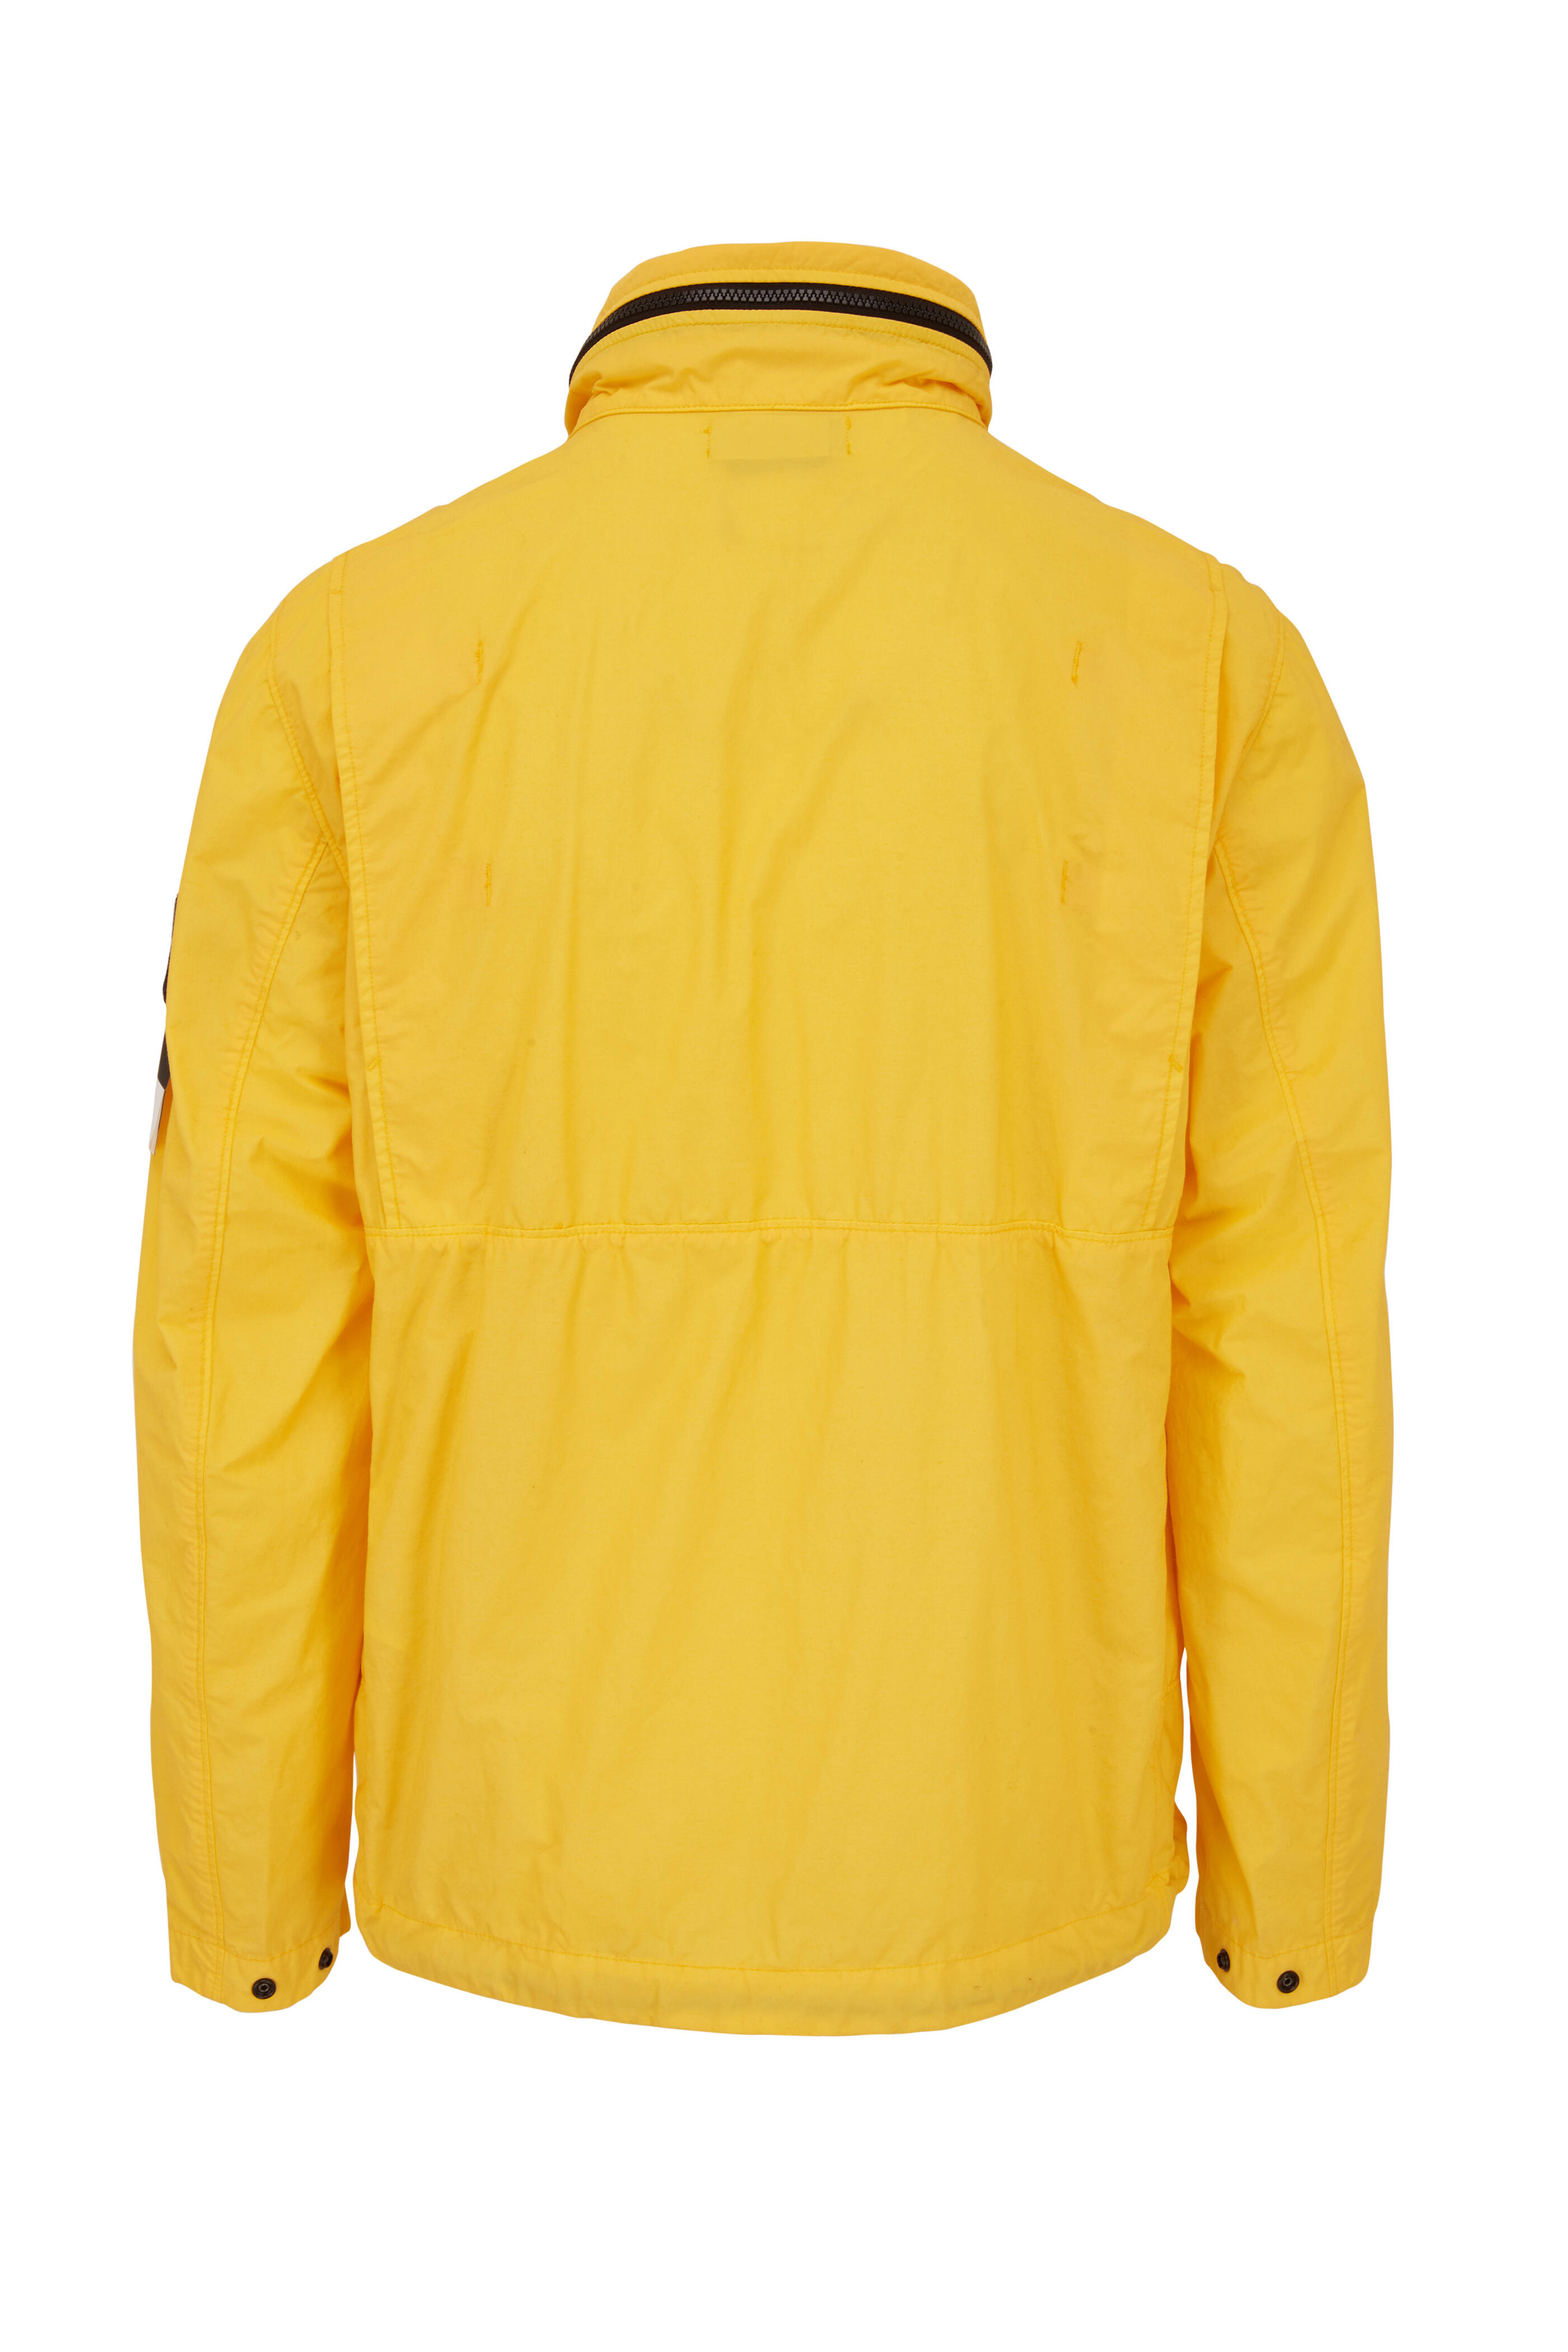 Stone Island - Naslan Light Watro Garment Dyed Yellow Jacket